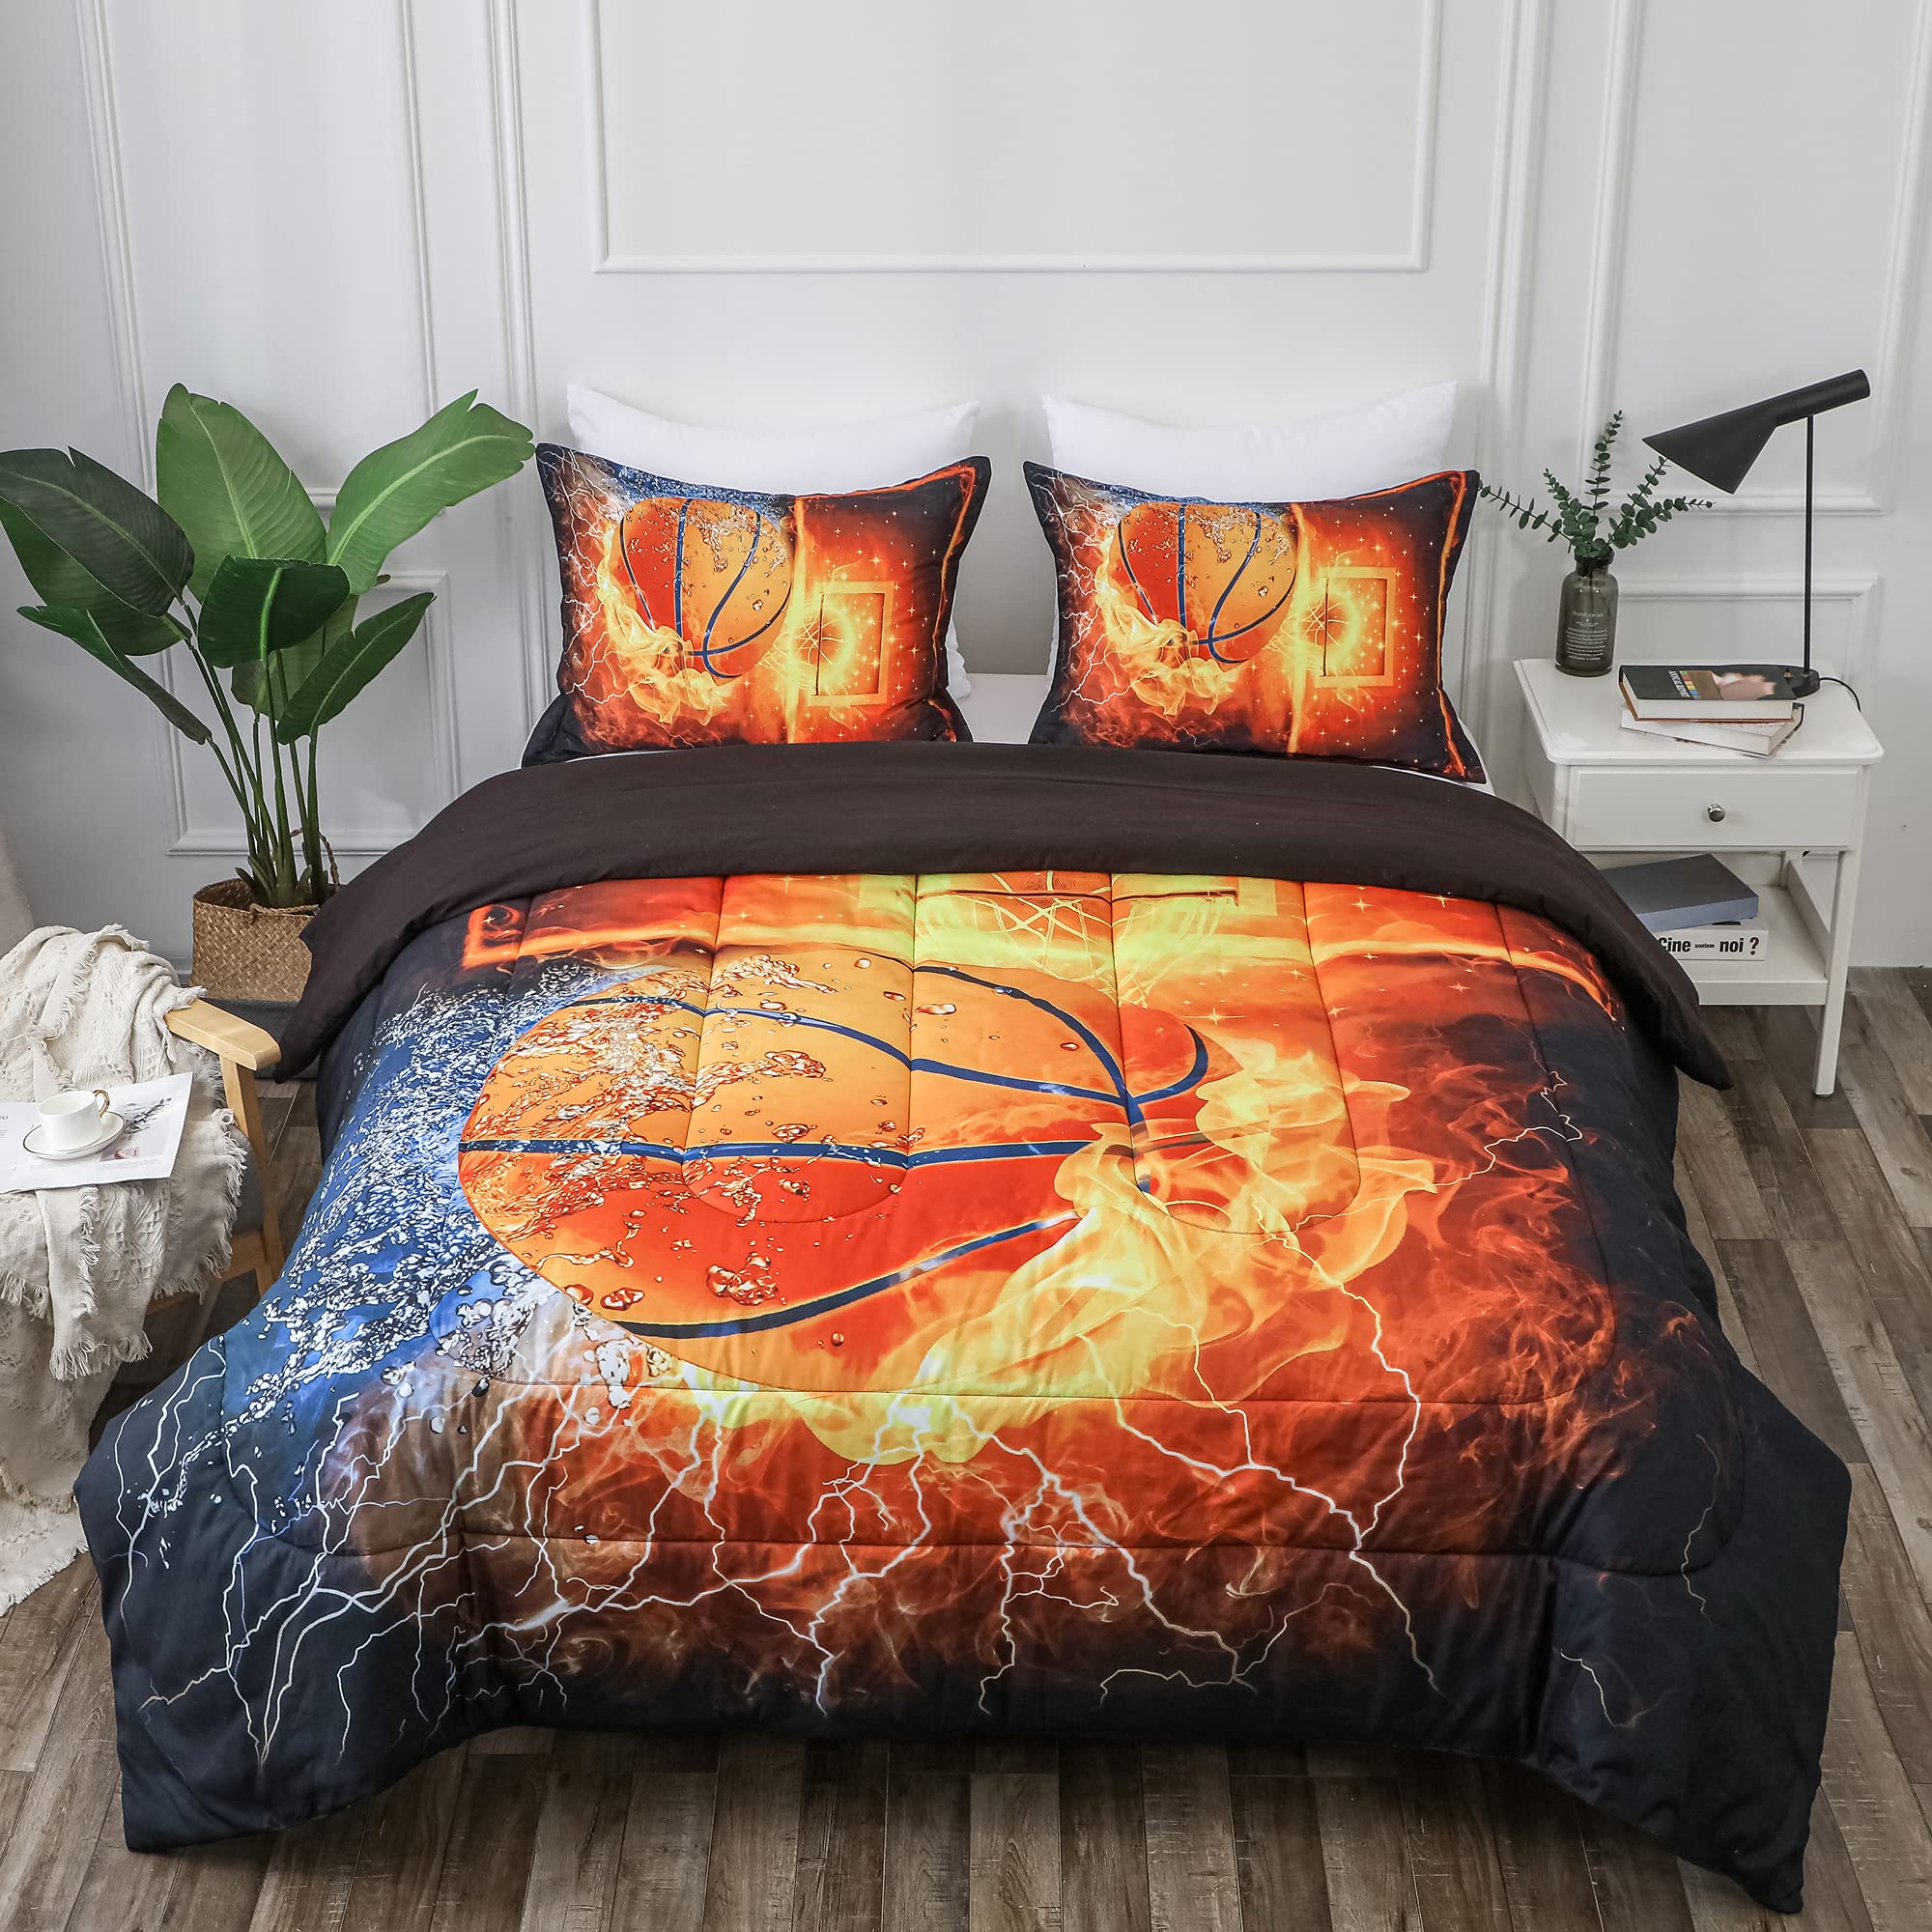 Litanika Basketball Comforter Twin(66x90lnch), 2 Pieces(1 Basketball Comforter and 1 Pillowcase) 3D Sport Basketball Comforter Set Microfiber Beddi...